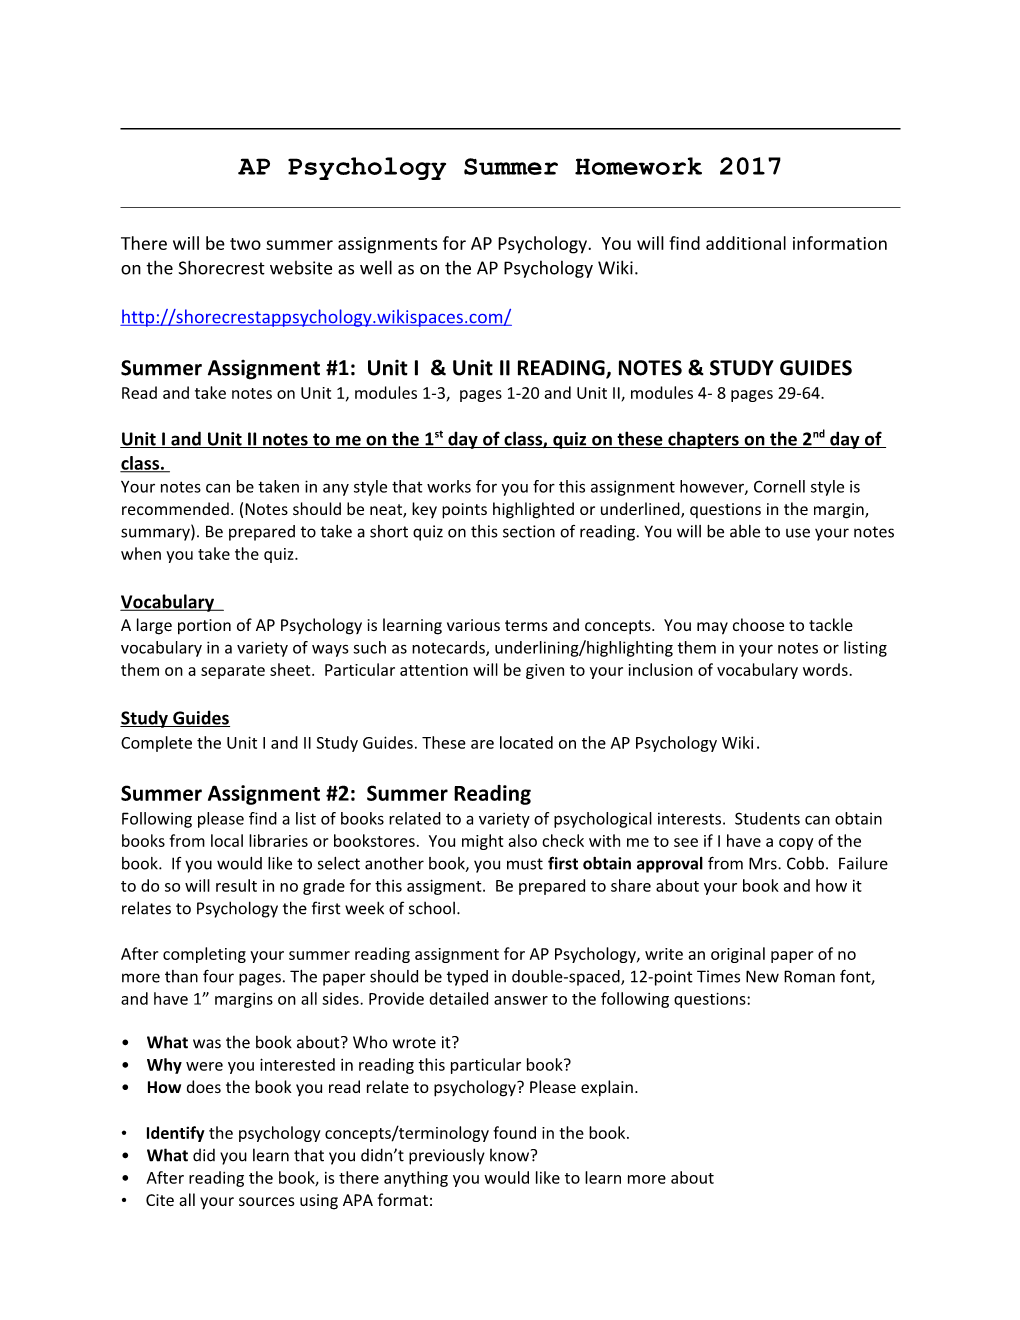 AP Psychology Summer Homework 2012-2013